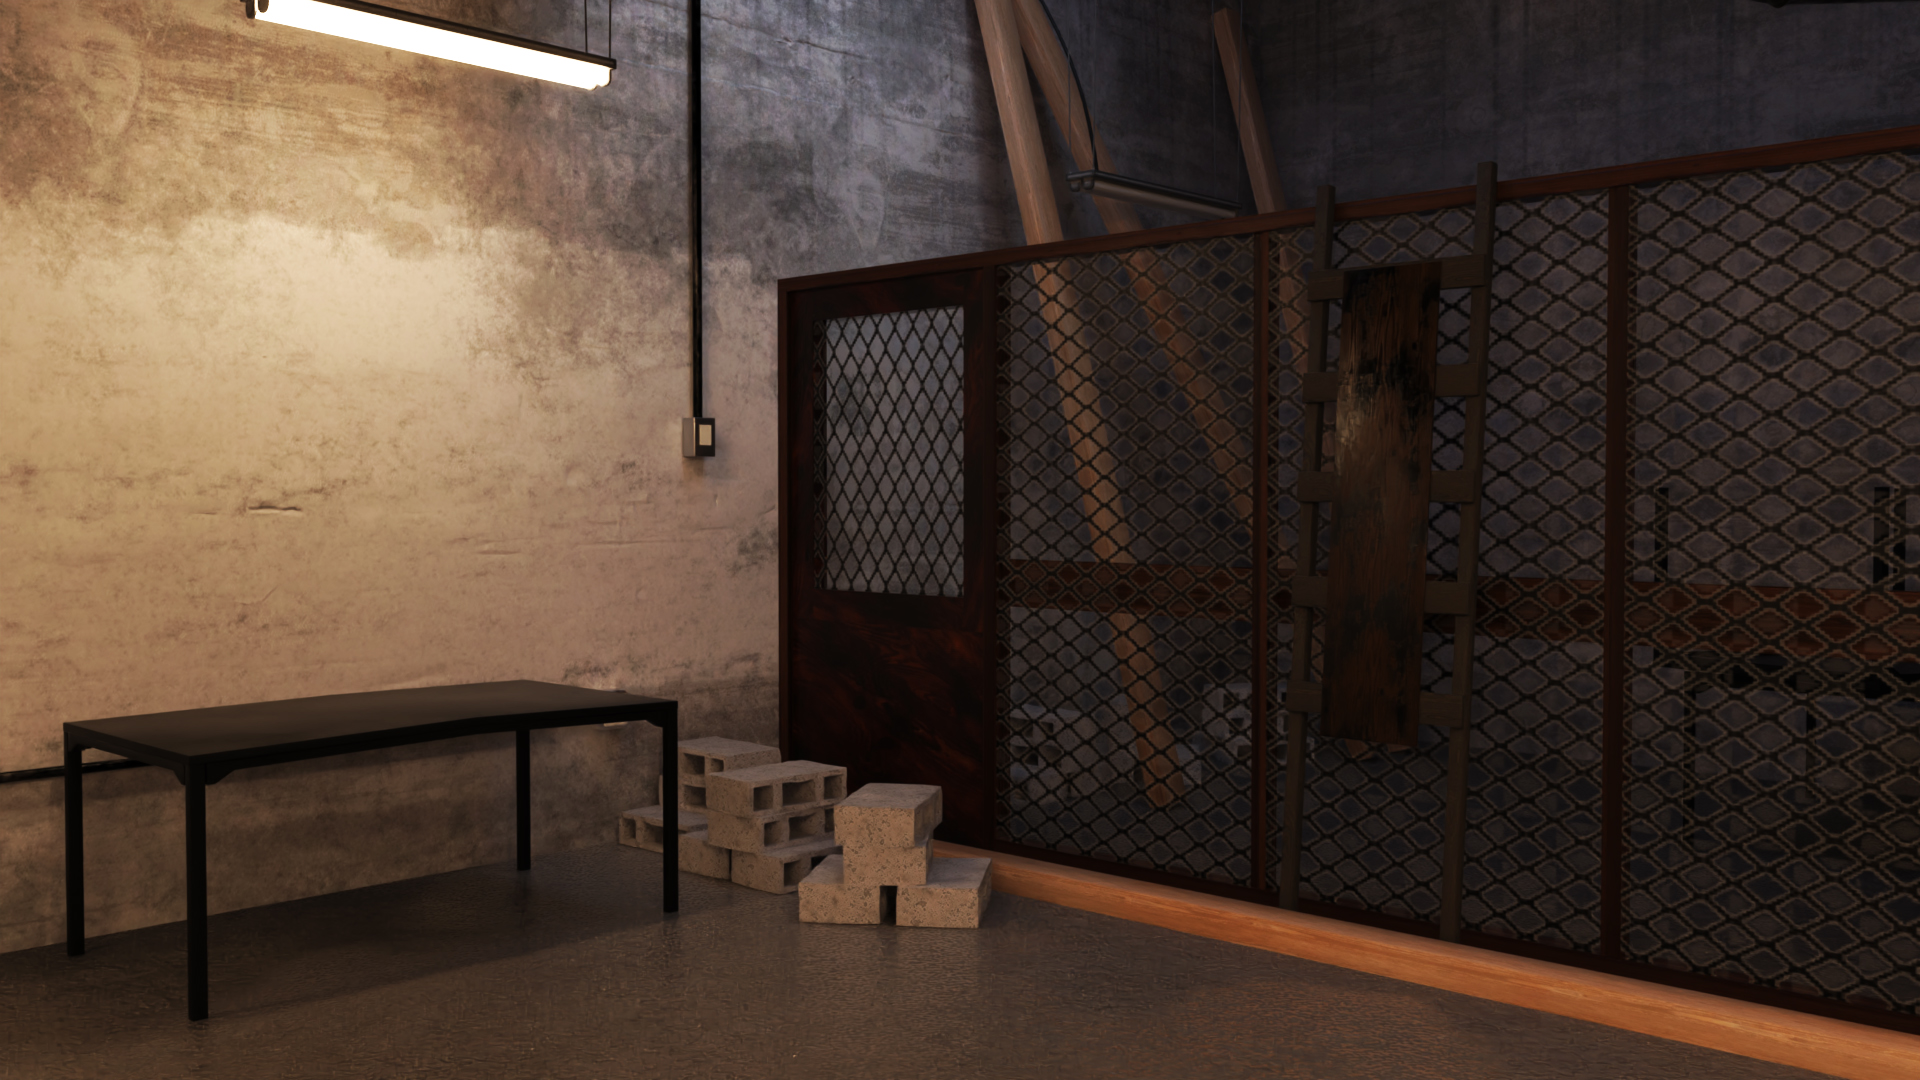 Old Interrogation Room by: Tesla3dCorp, 3D Models by Daz 3D